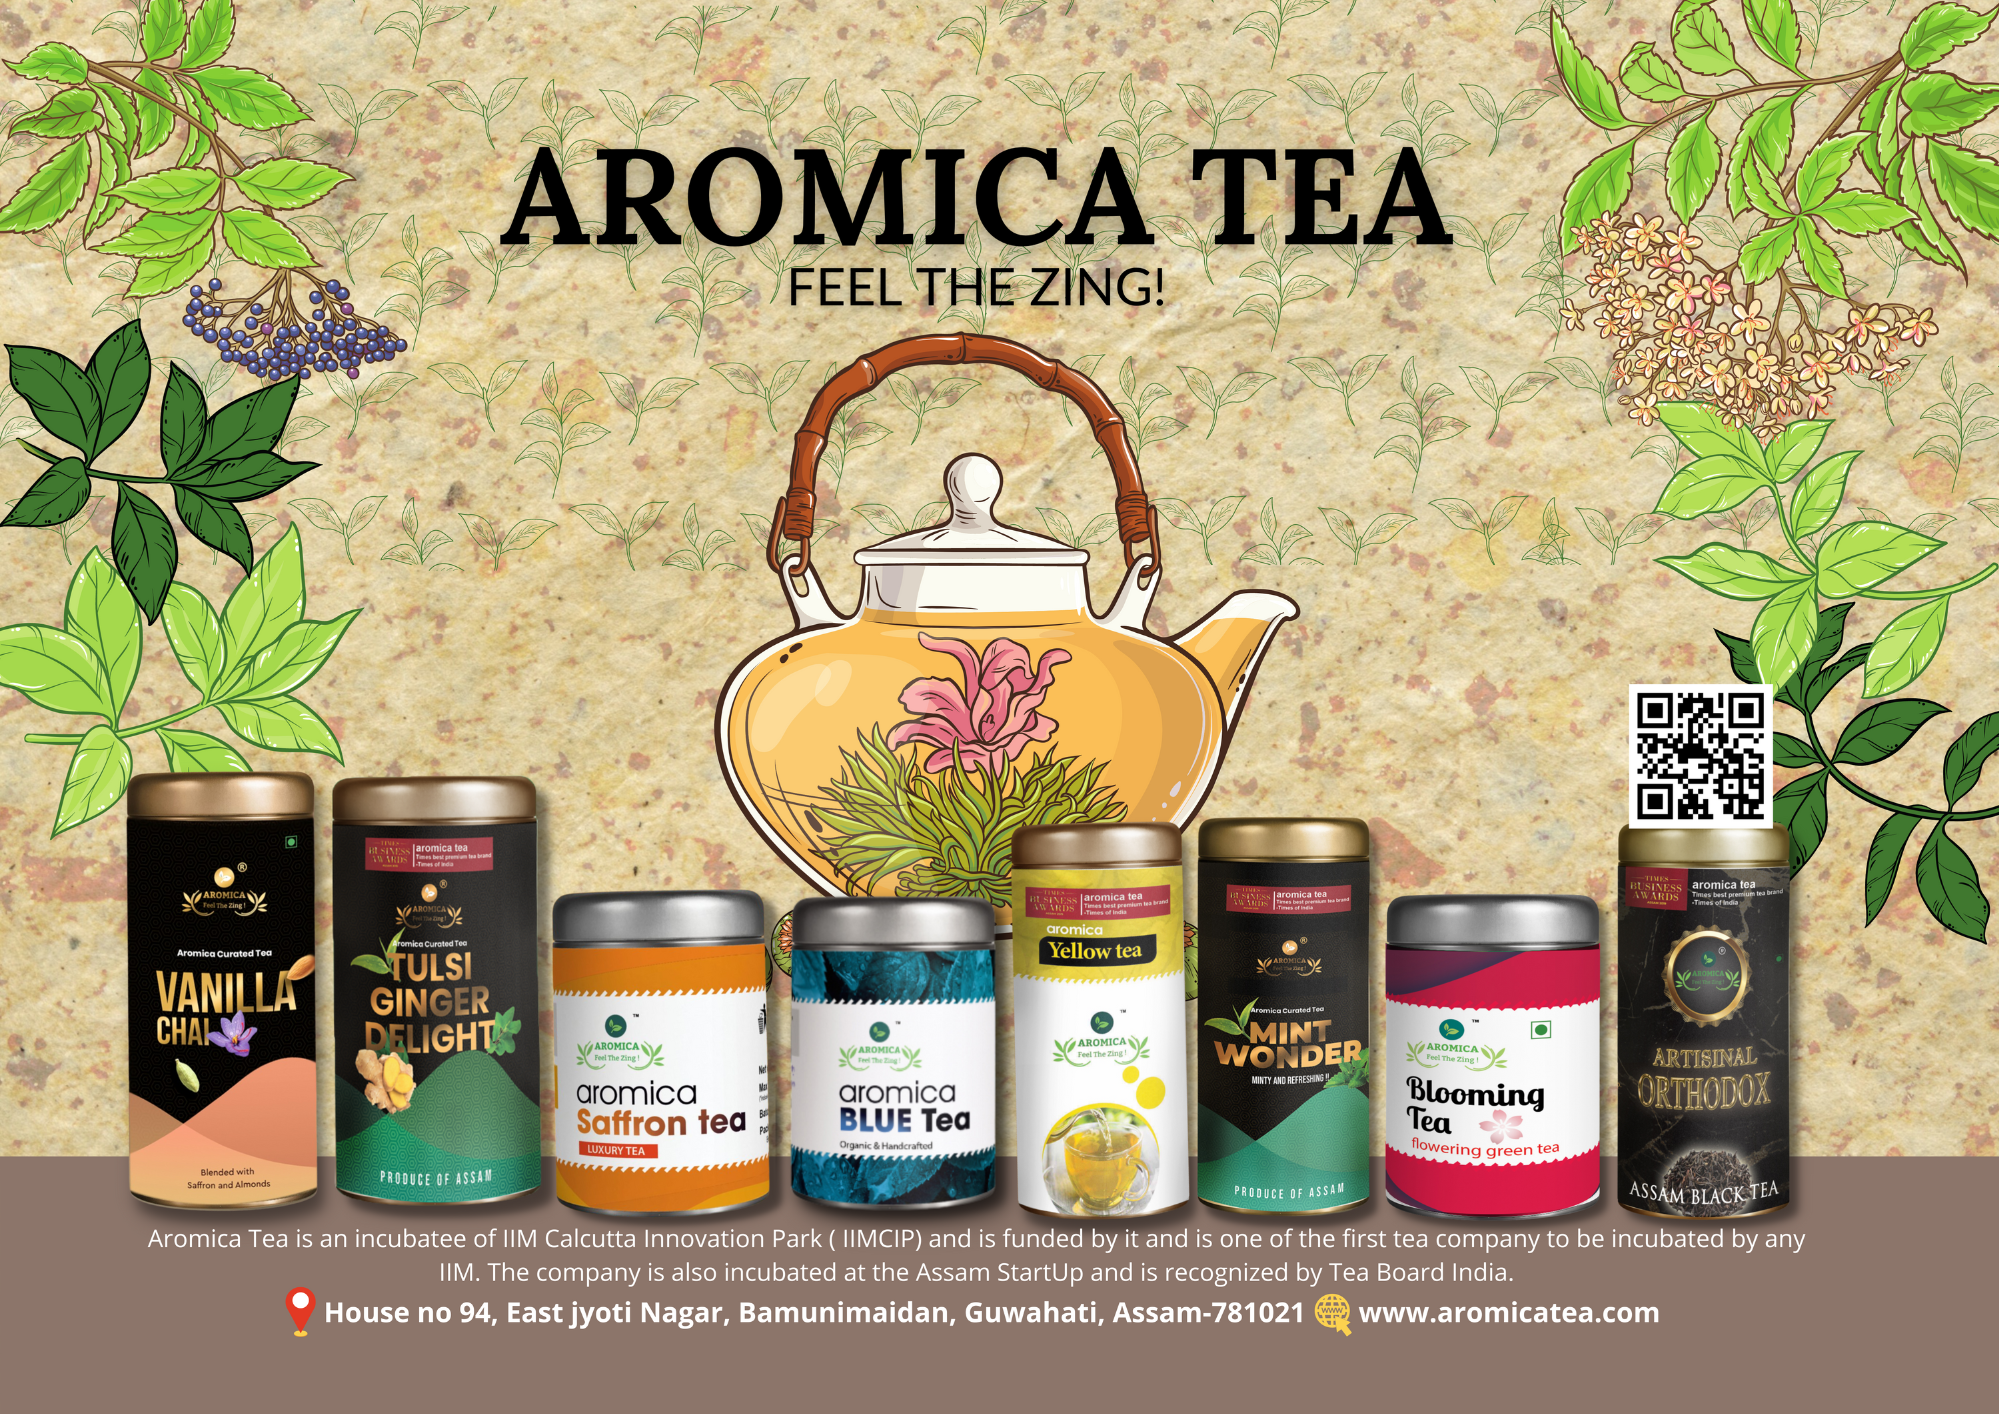 A REVOLUTION THAT FITS A TEA-Aromica Tea – ORDER NOW